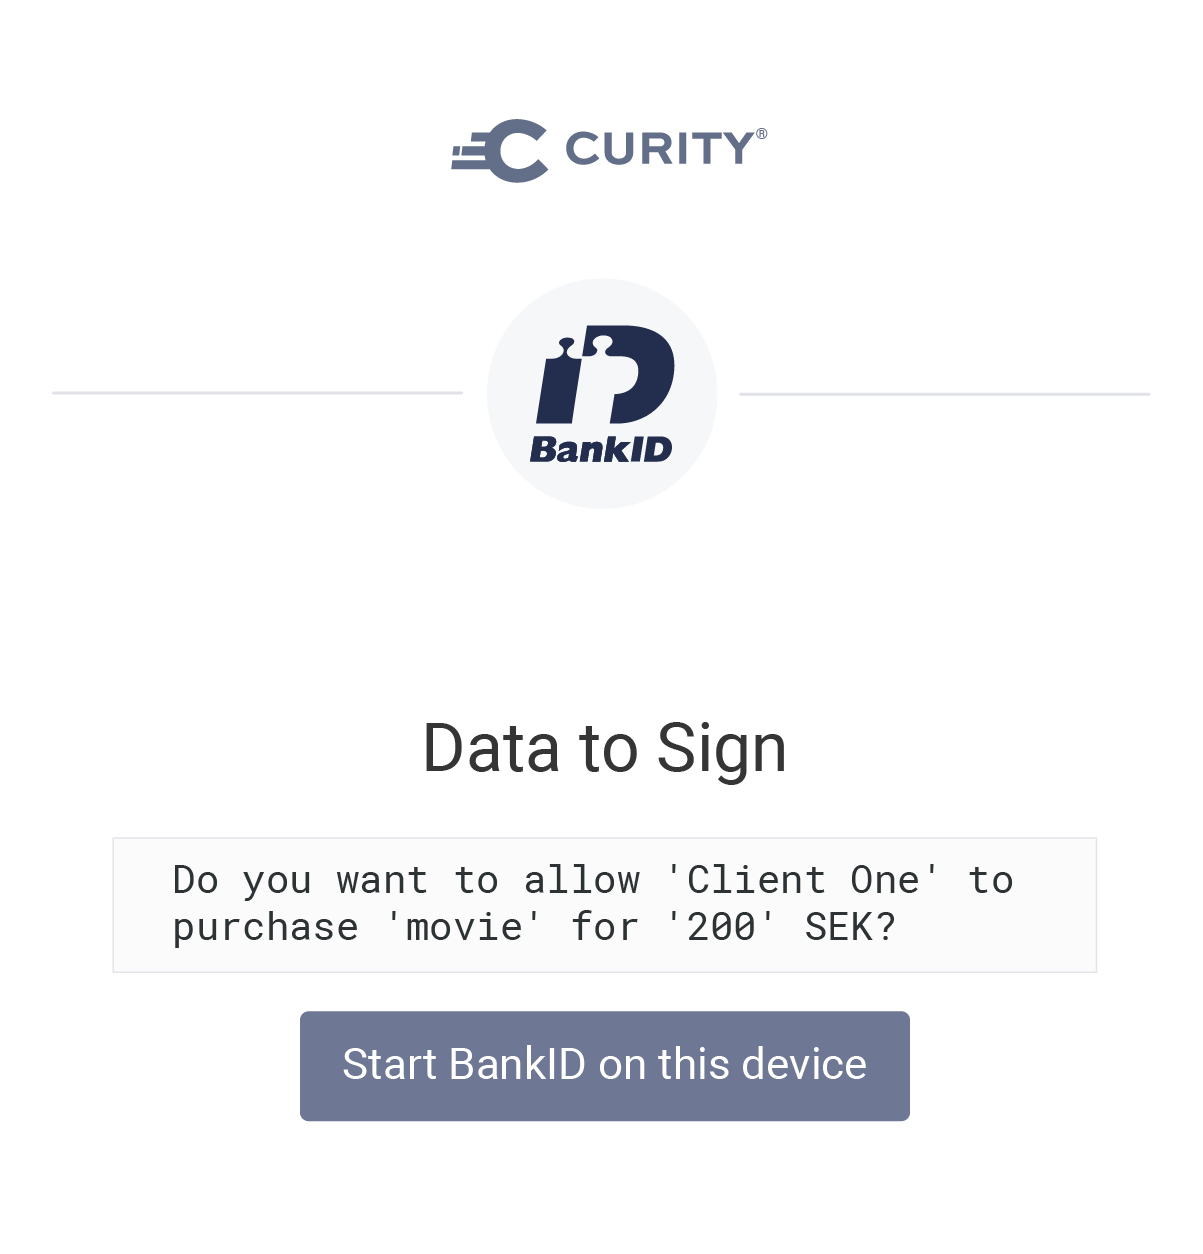 curity-bank-id-app2app-2blog